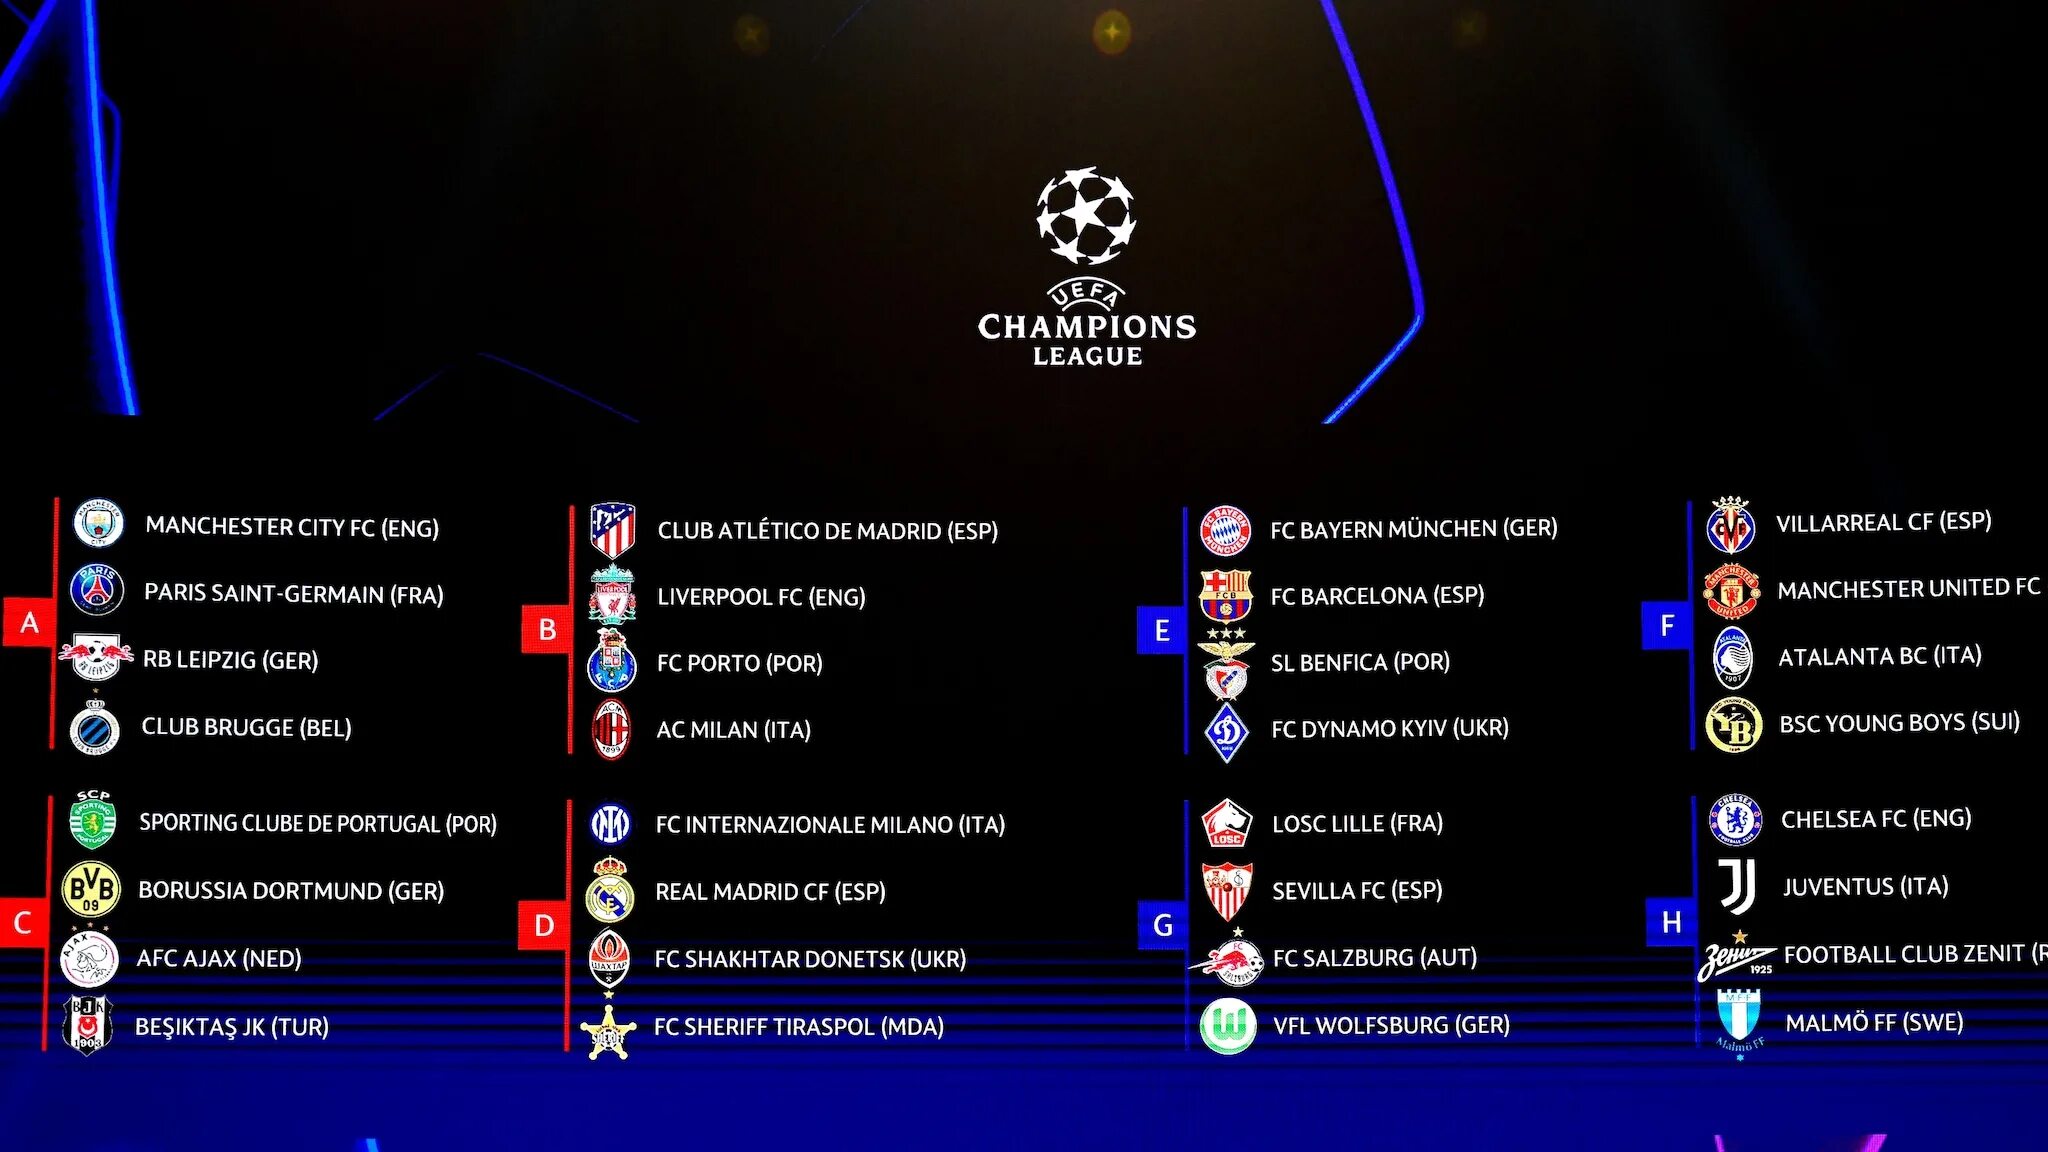 Champions league drawn. UEFA Champions League 2021-22. ЛЧ 2021 групповой этап. Таблица группового этапа Лиги чемпионов. 1/8 Стадия Лиги чемпионов.